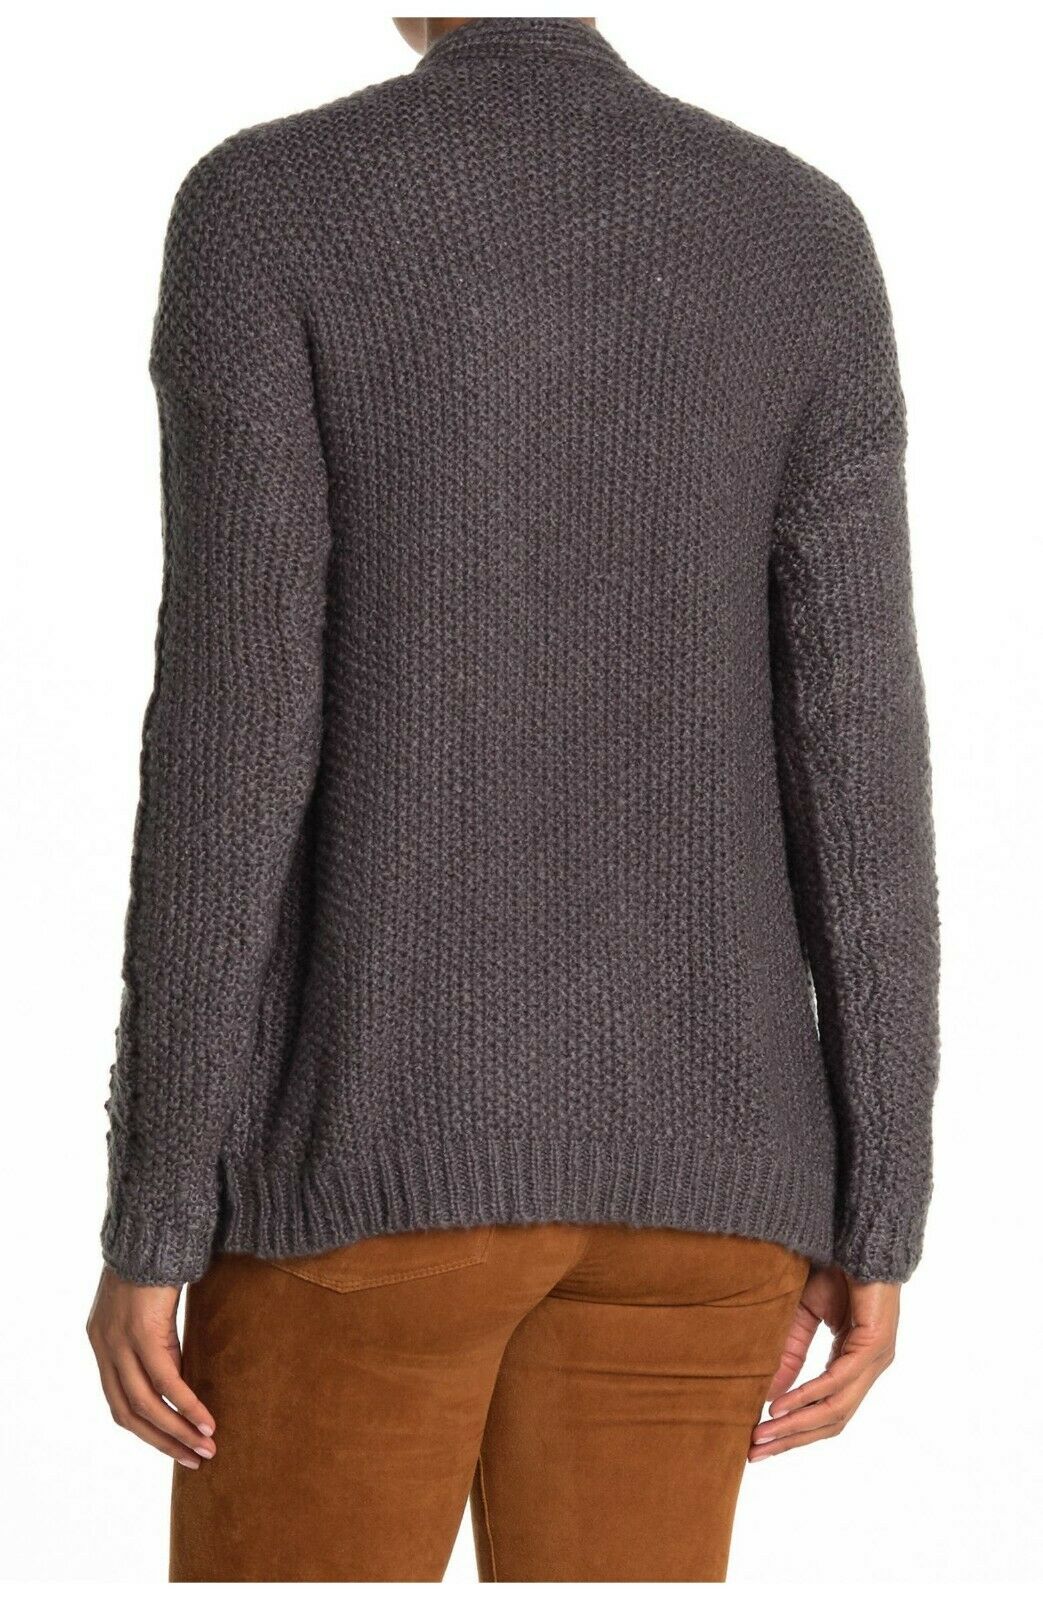 CENY Mix Cable Grandpa Knit Cardigan Sweater size XS Dark Charcoal Gray